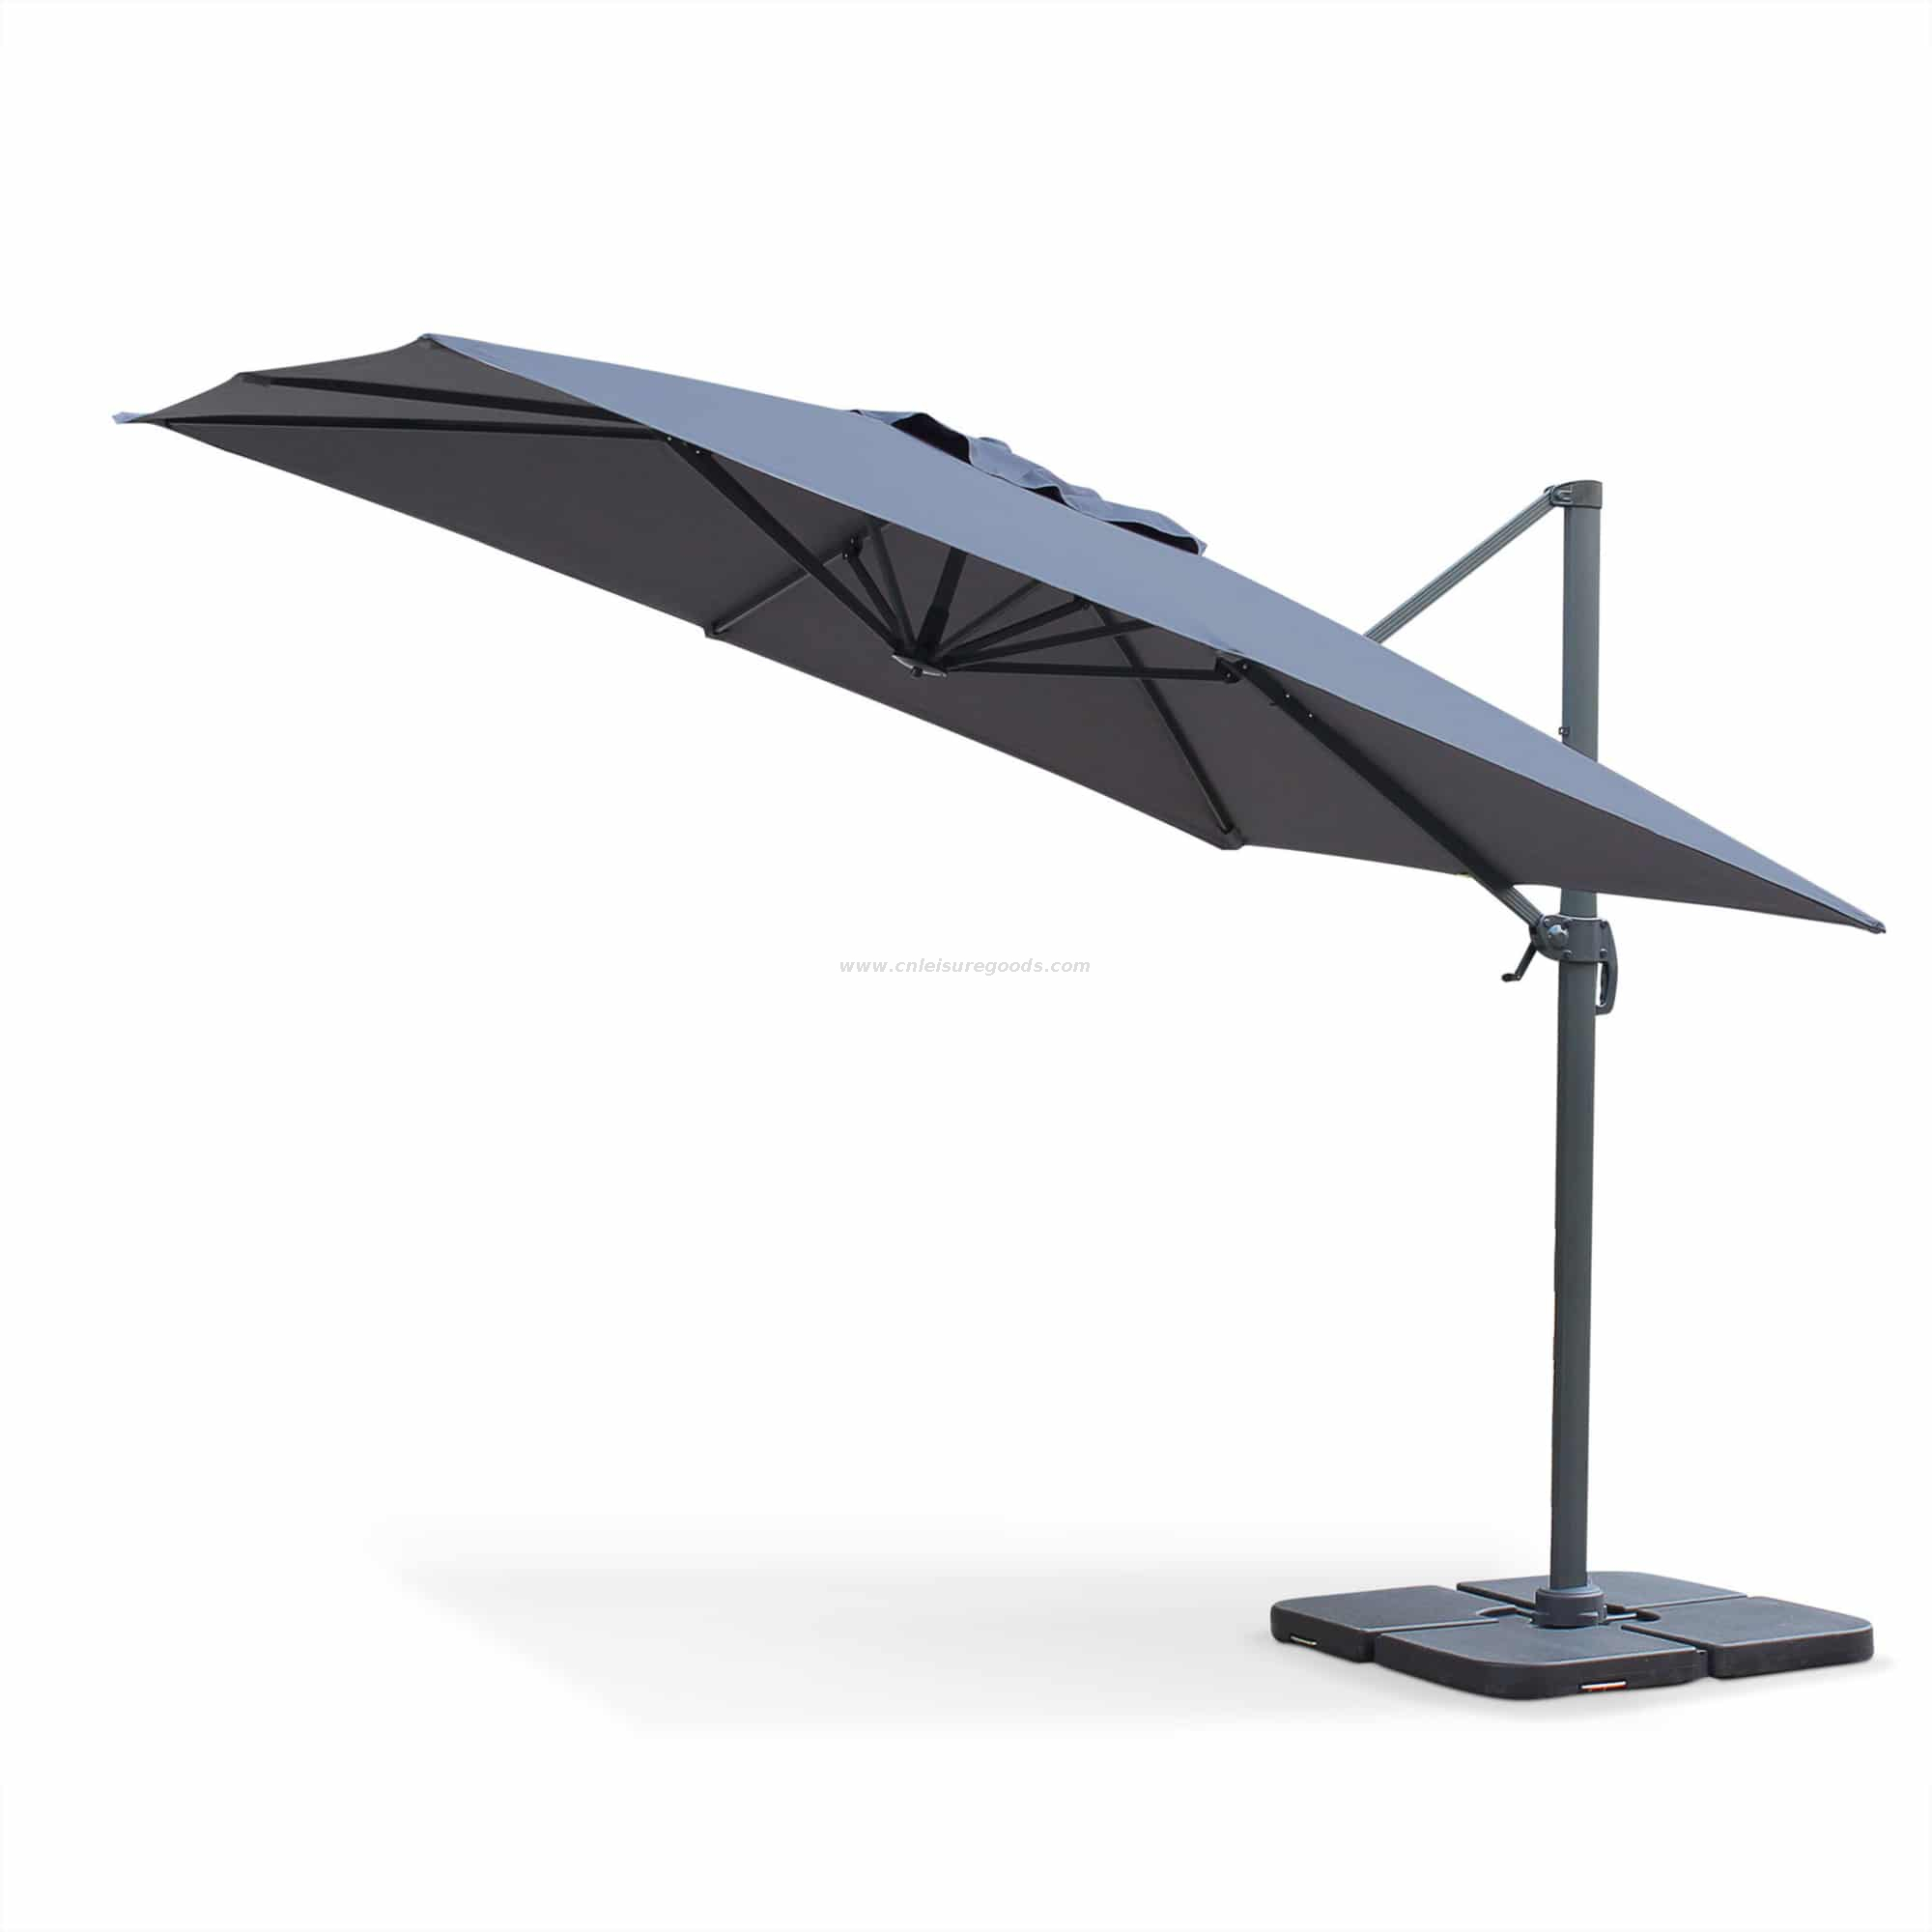 Uplion Patio Waterproof Garden Furniture Coffee Shop Square Outdoor Parasol Luxury Roma Umbrella